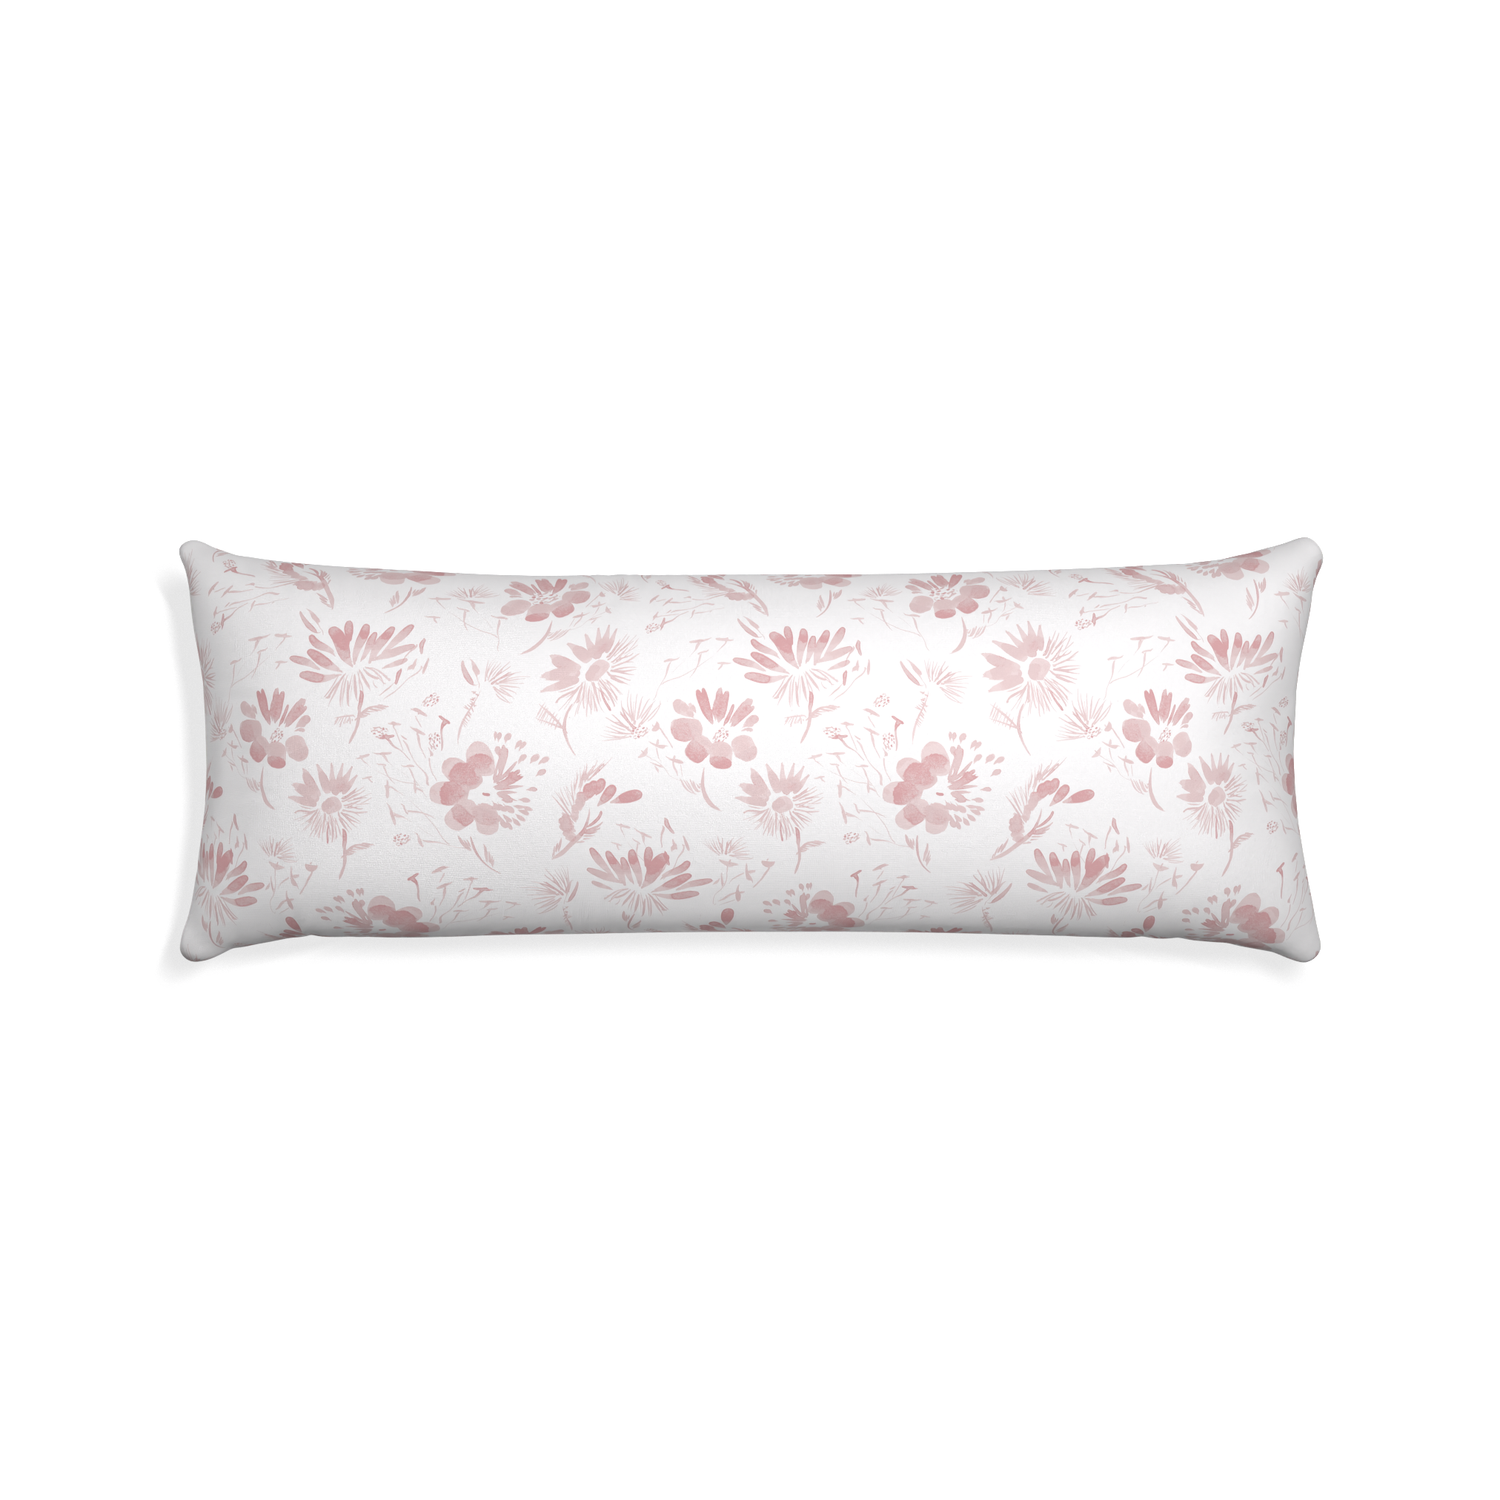 Xl-lumbar blake custom pillow with none on white background